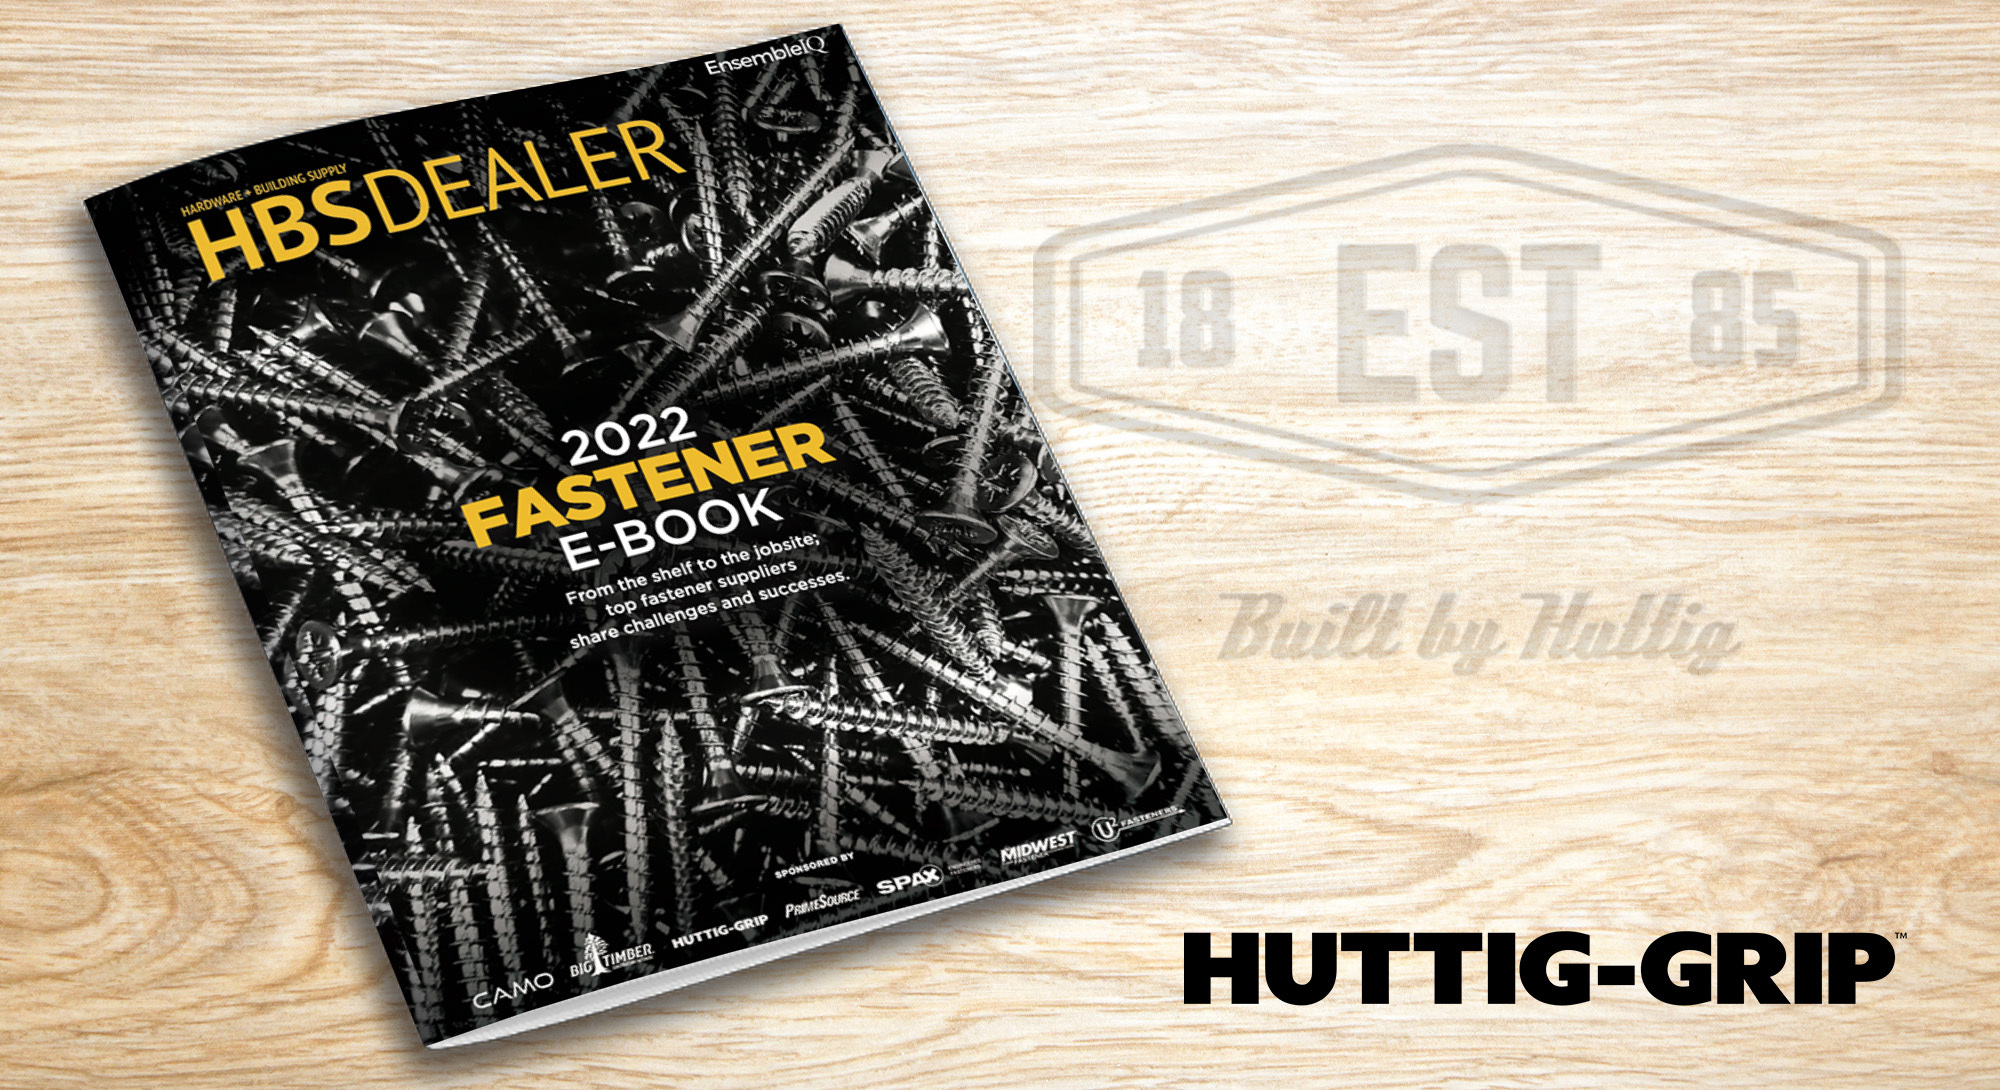 Huttig-Grip Featured in HBSDealer 2022 Fastener E-Book